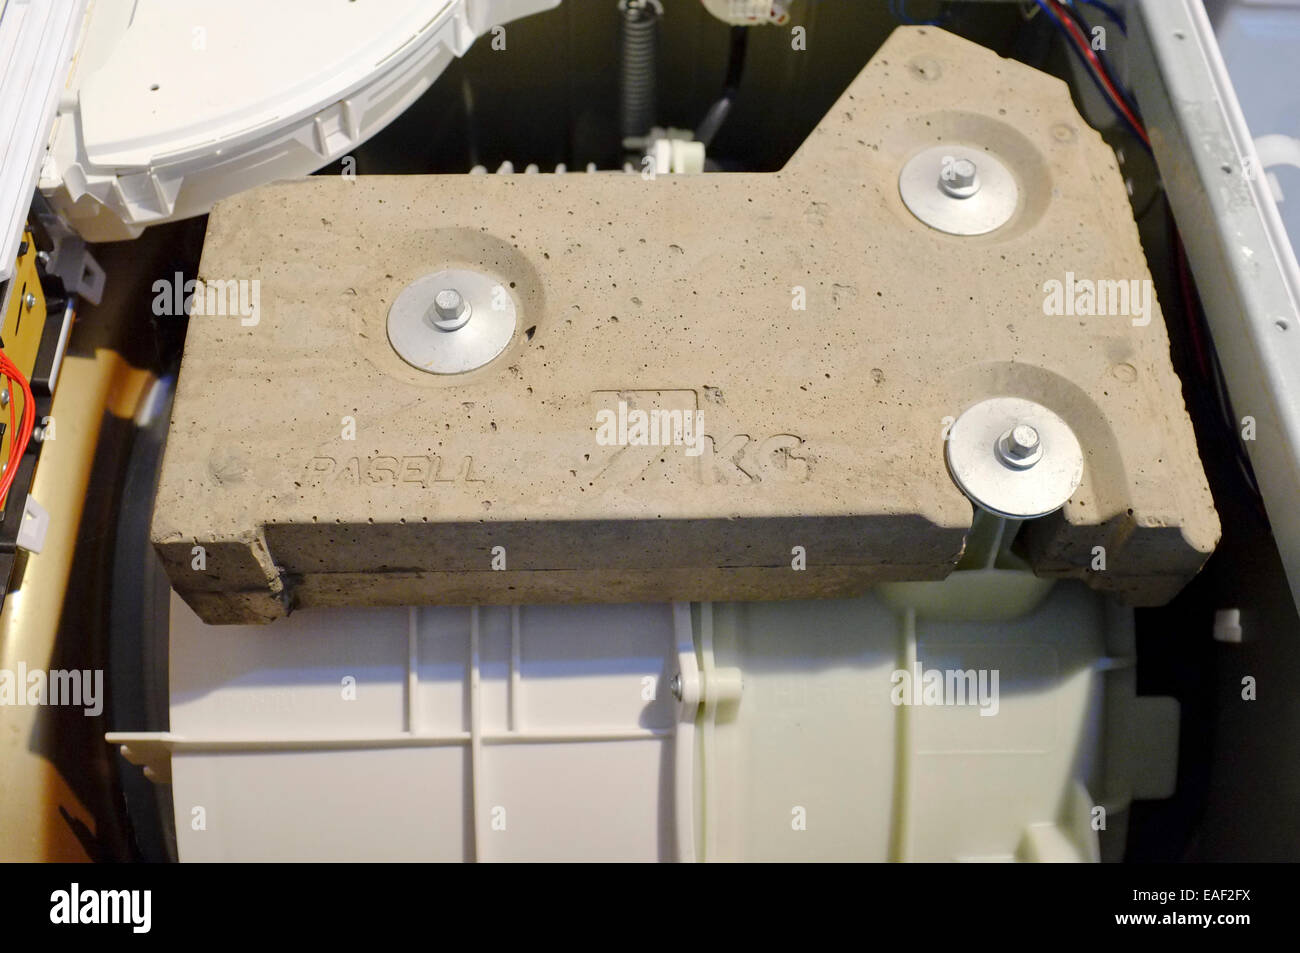 washing machine internal stabilizing concrete weight Stock Photo - Alamy